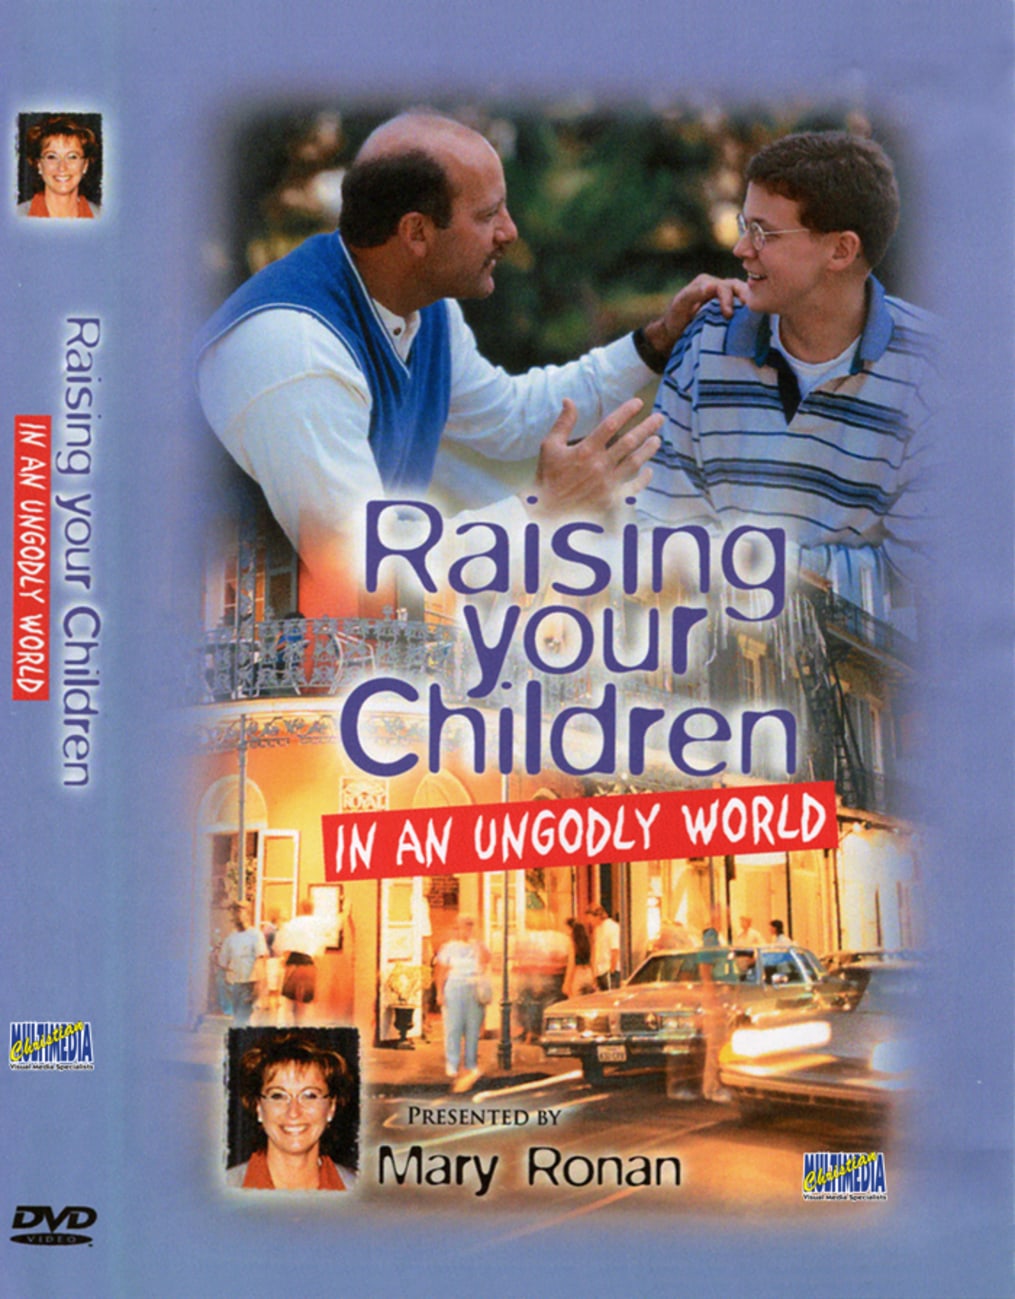 Raising Your Children DVD